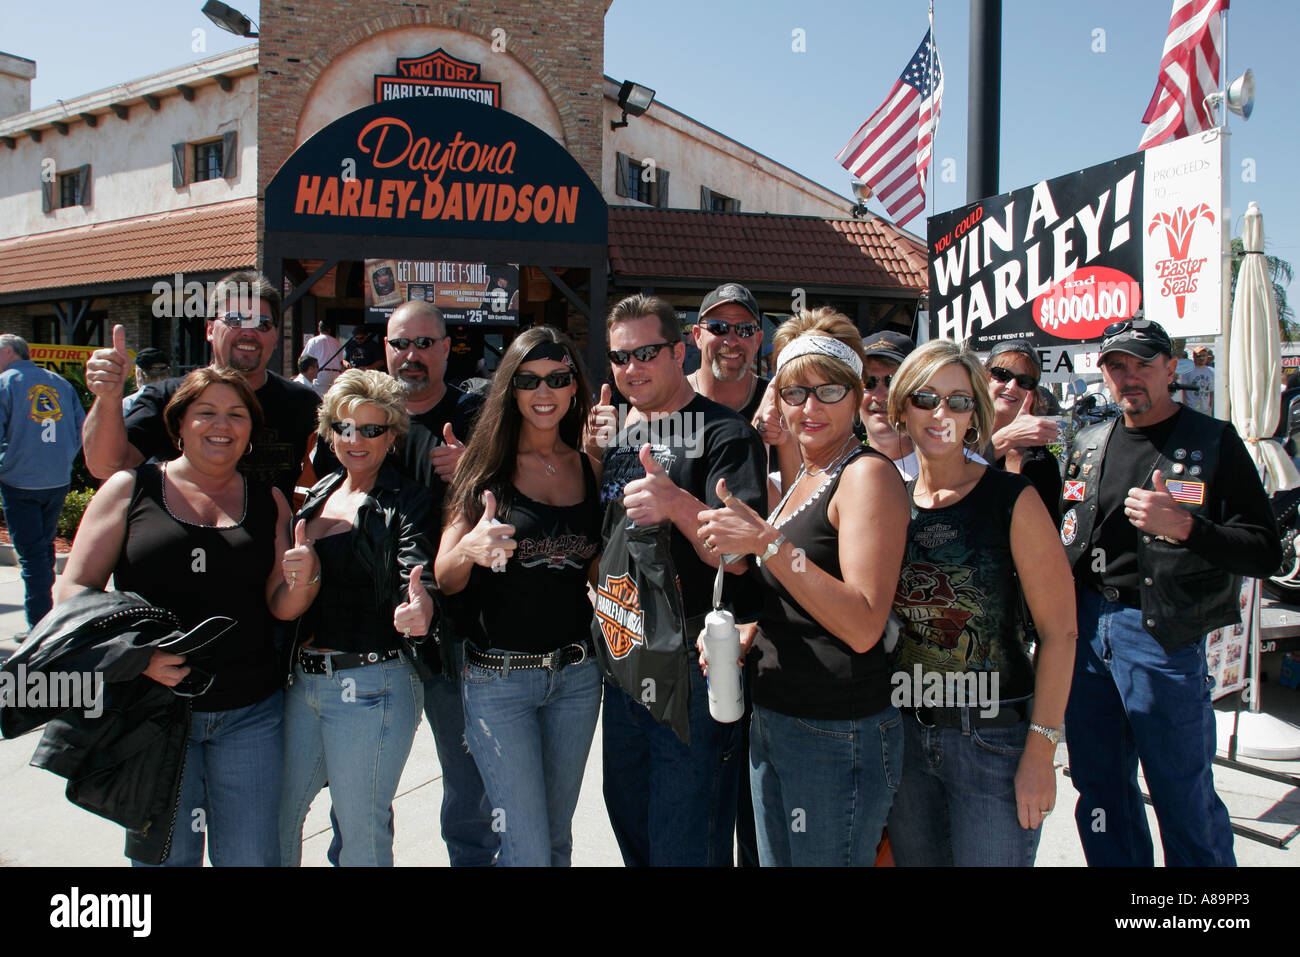 Florida Daytona Beach Bike Week Motorcycle Owners Event Celebration Annual Harley Davidson Dealer Couples Friends Enthusiasts Man Woman Black Clothing Stock Photo Alamy